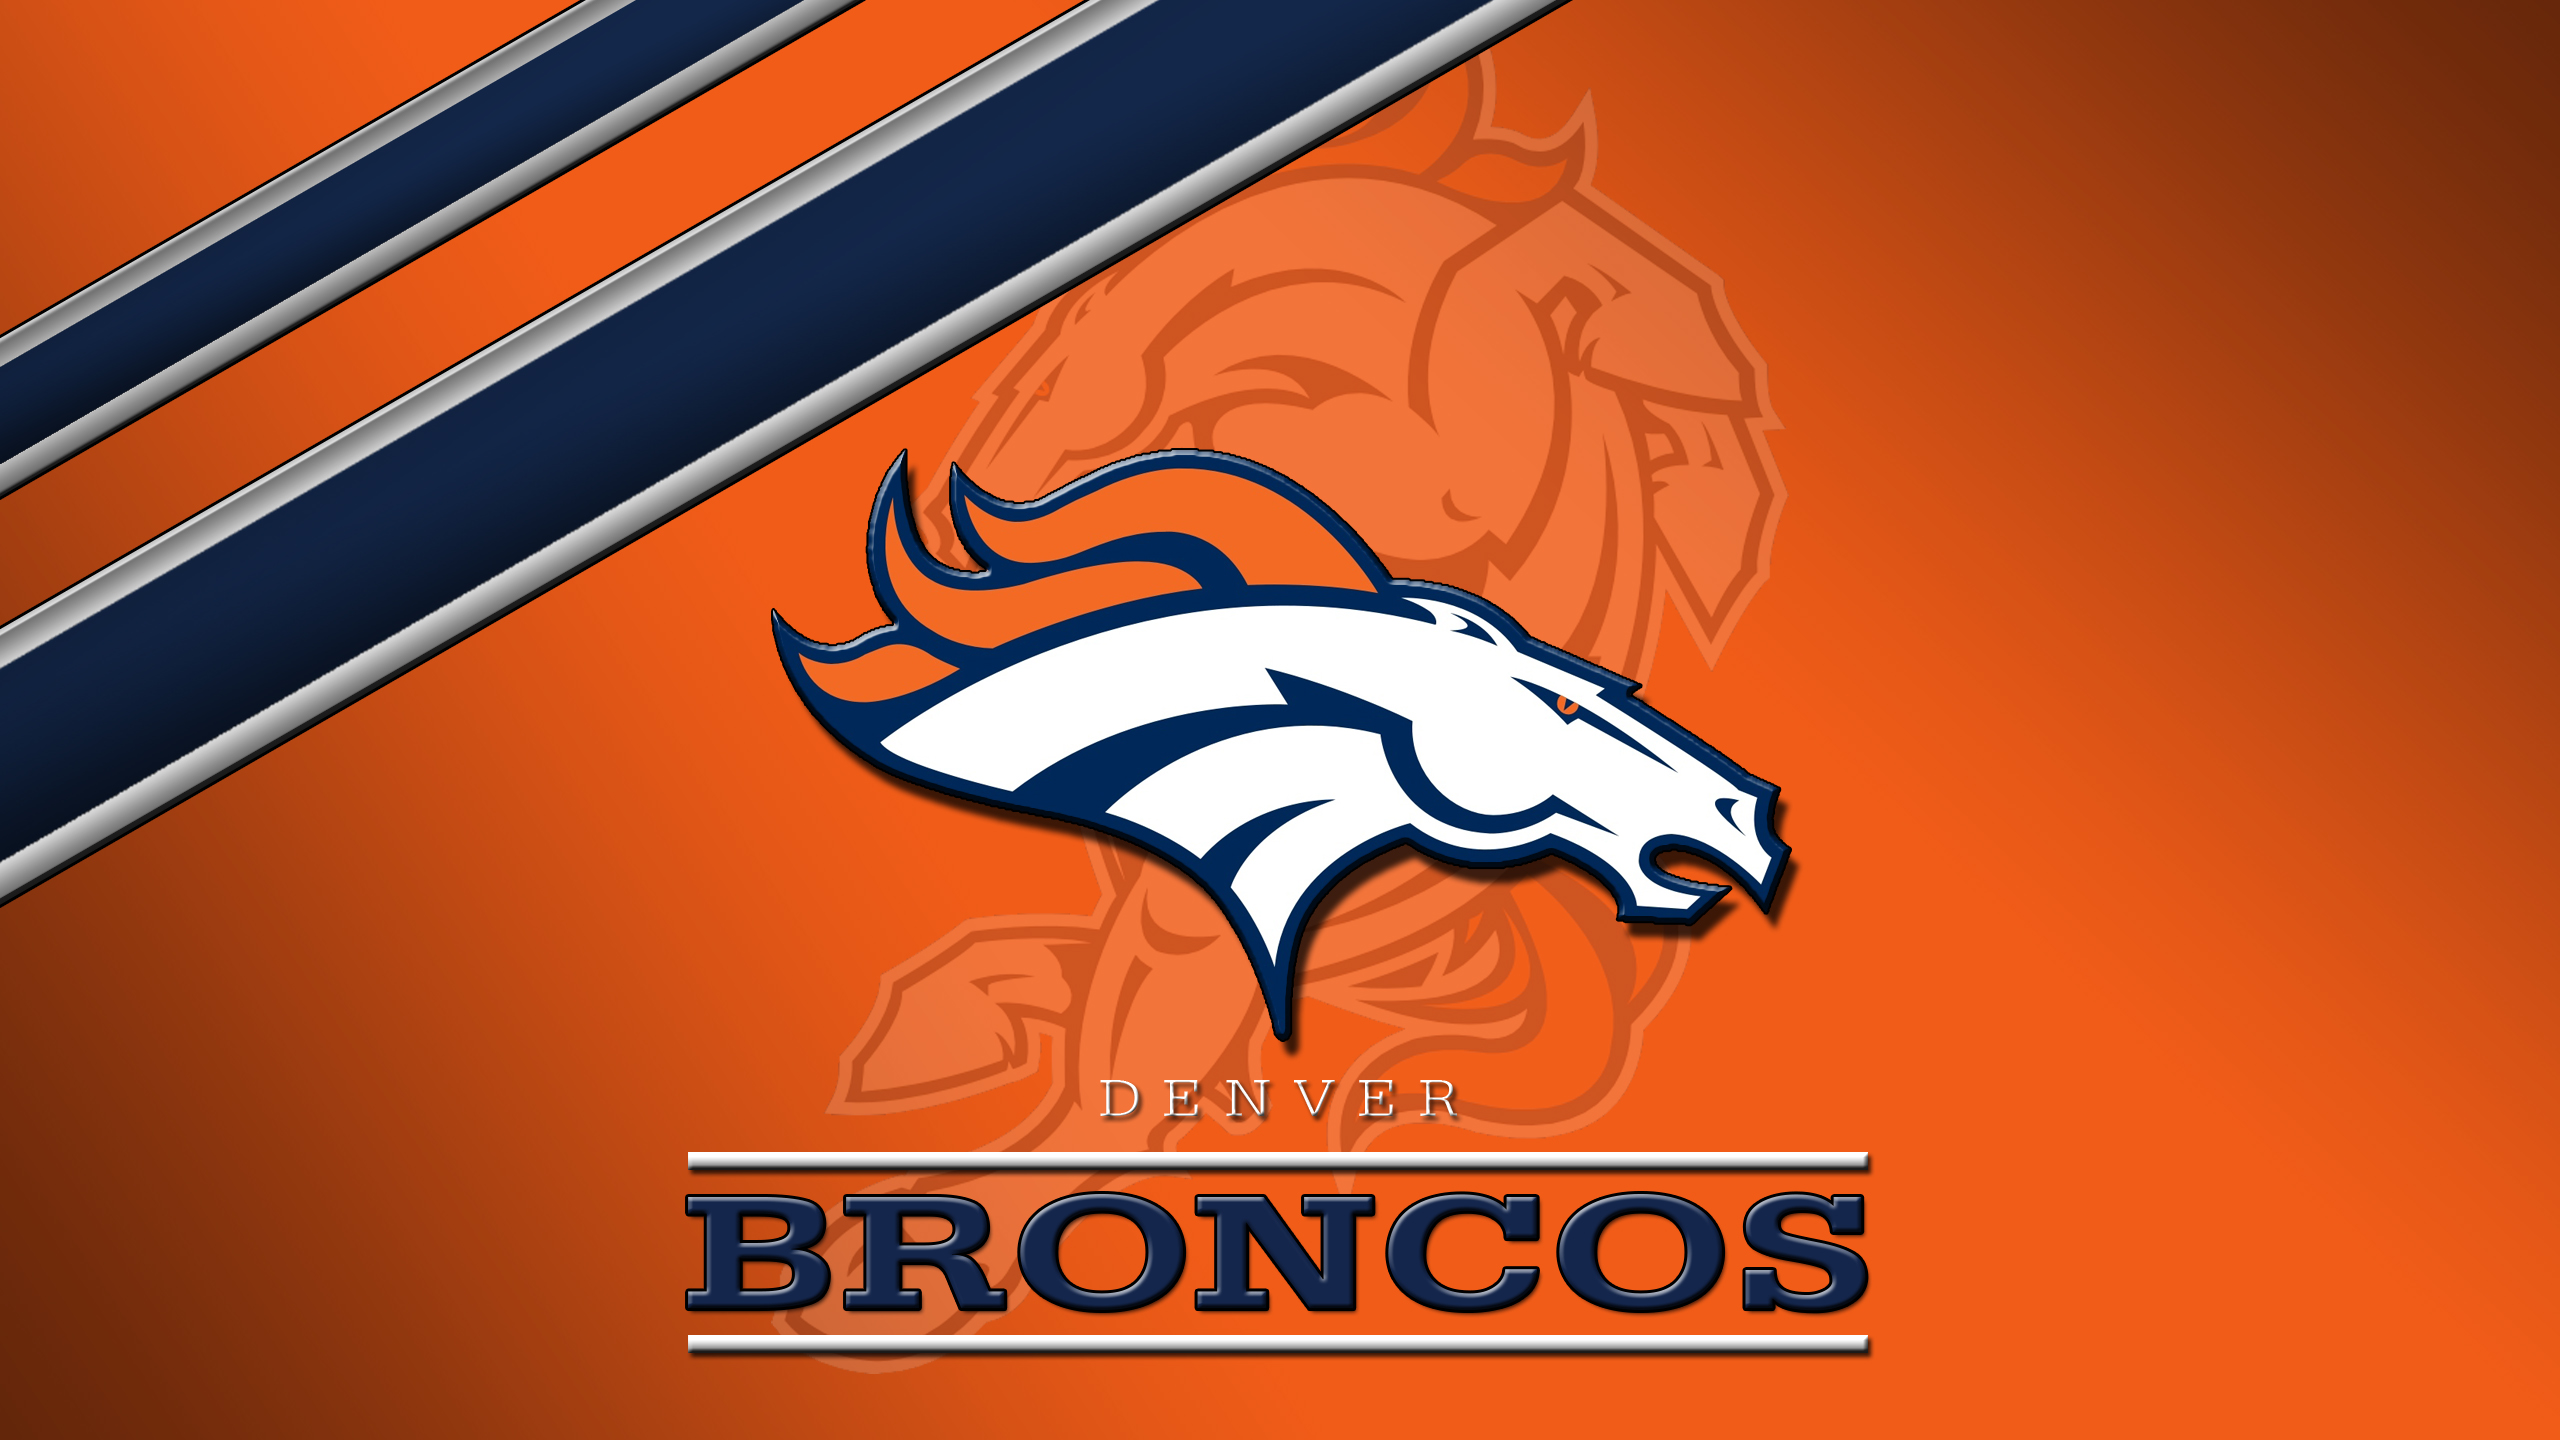 Denver Broncos by BeAware8 on